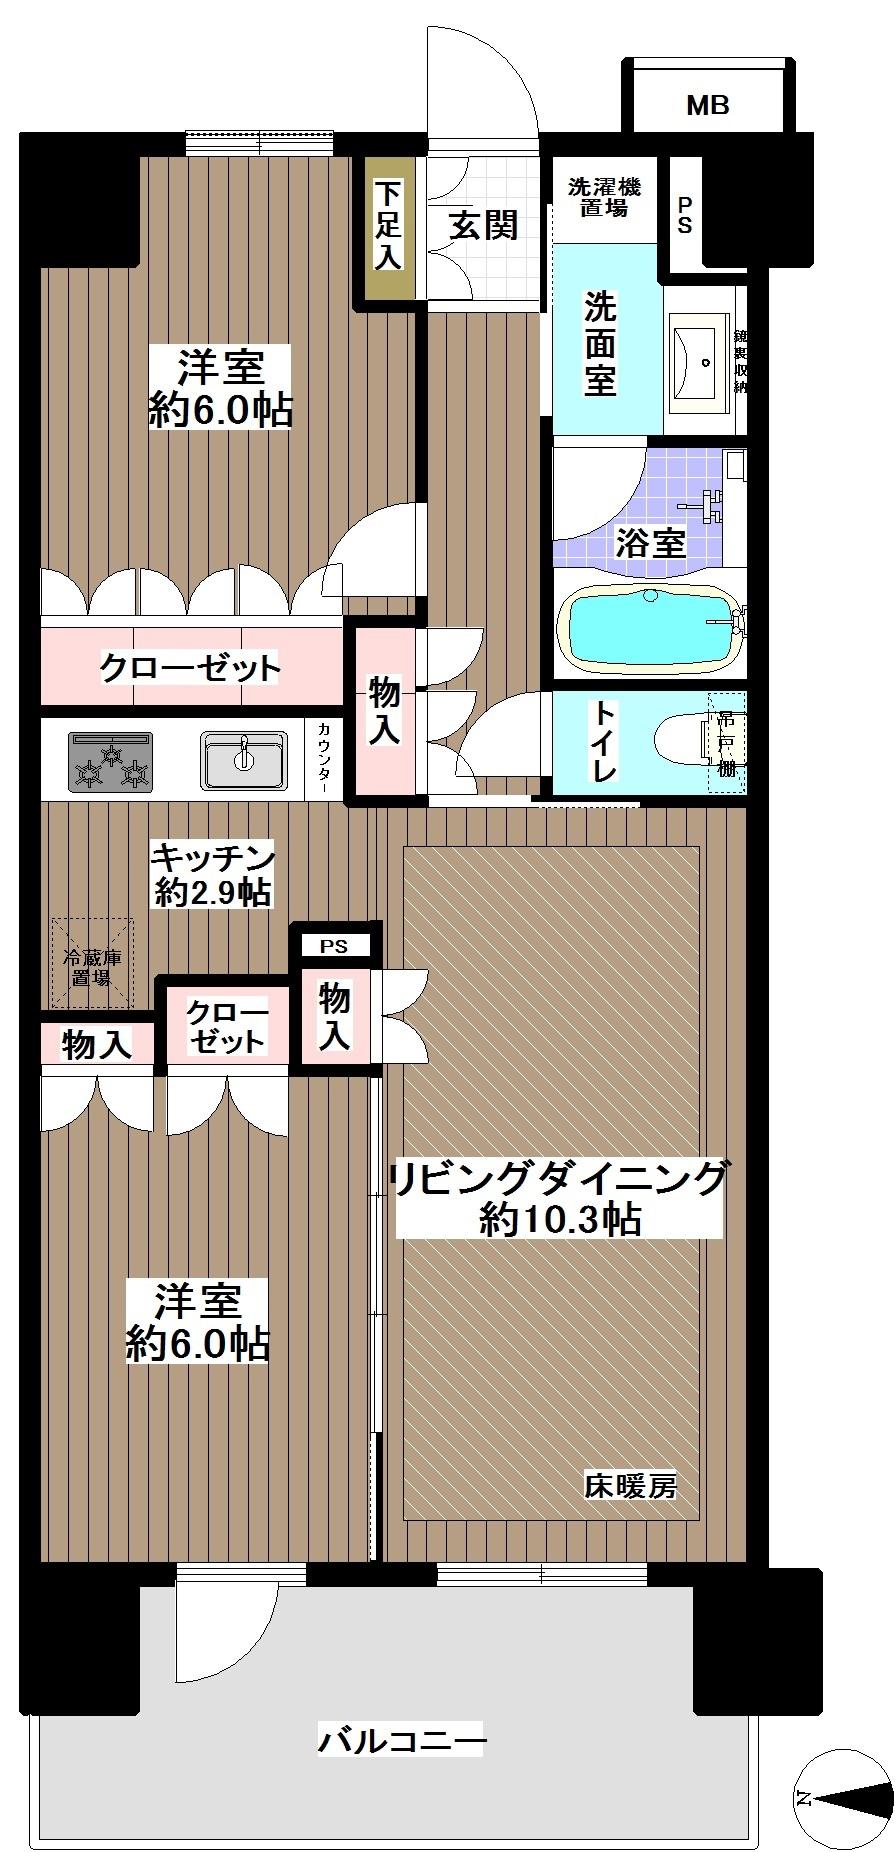 Floor plan. 2LDK, Price 37,800,000 yen, Occupied area 57.51 sq m , Balcony area 10.26 sq m